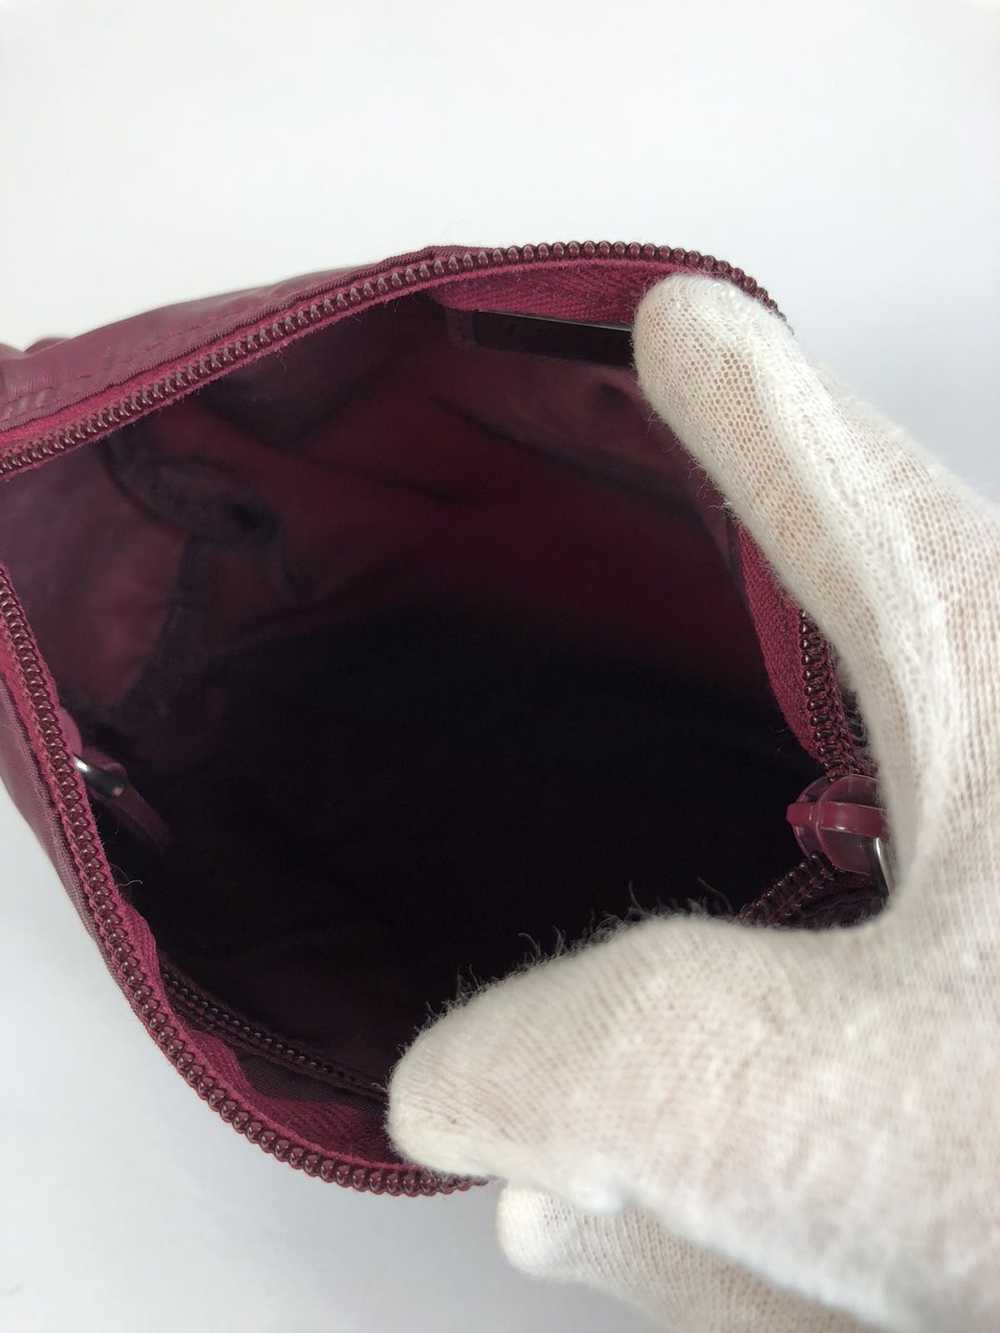 Prada Prada tessuto nylon cosmetic bag - image 3